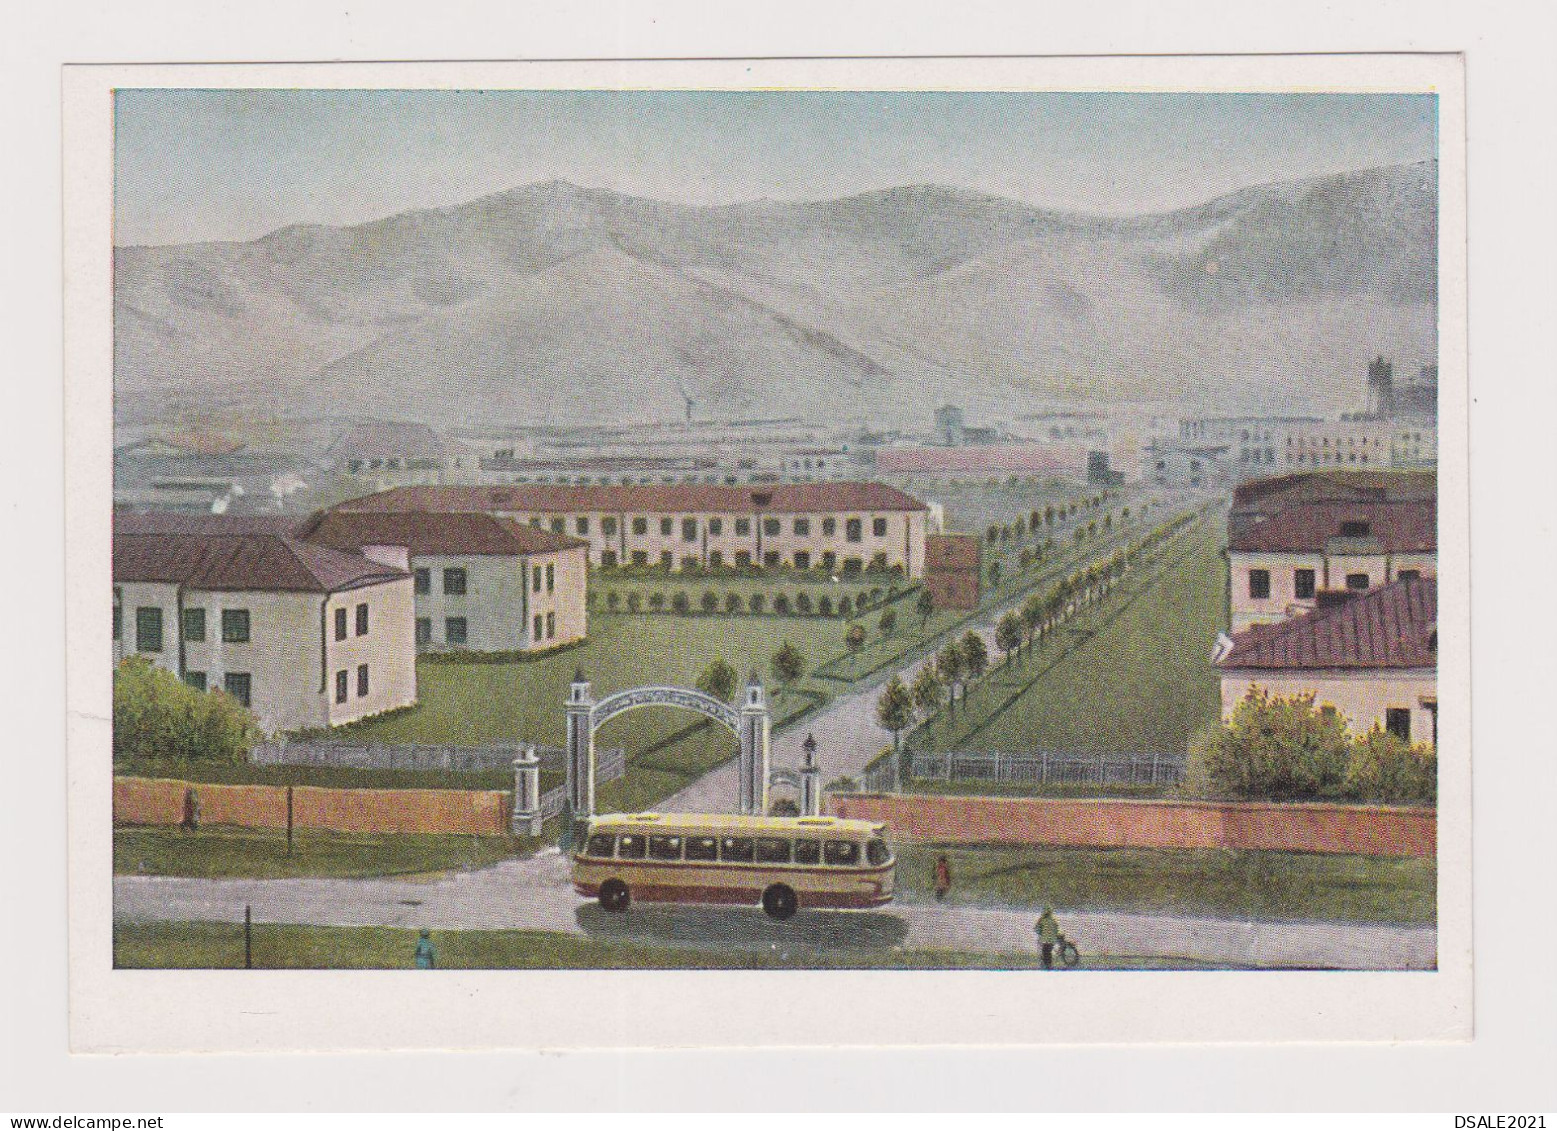 Mongolia Mongolei Mongolie Ulaanbaatar Industrial General Enterprise Vintage 1960s Soviet USSR Photo Postcard (66635) - Mongolië